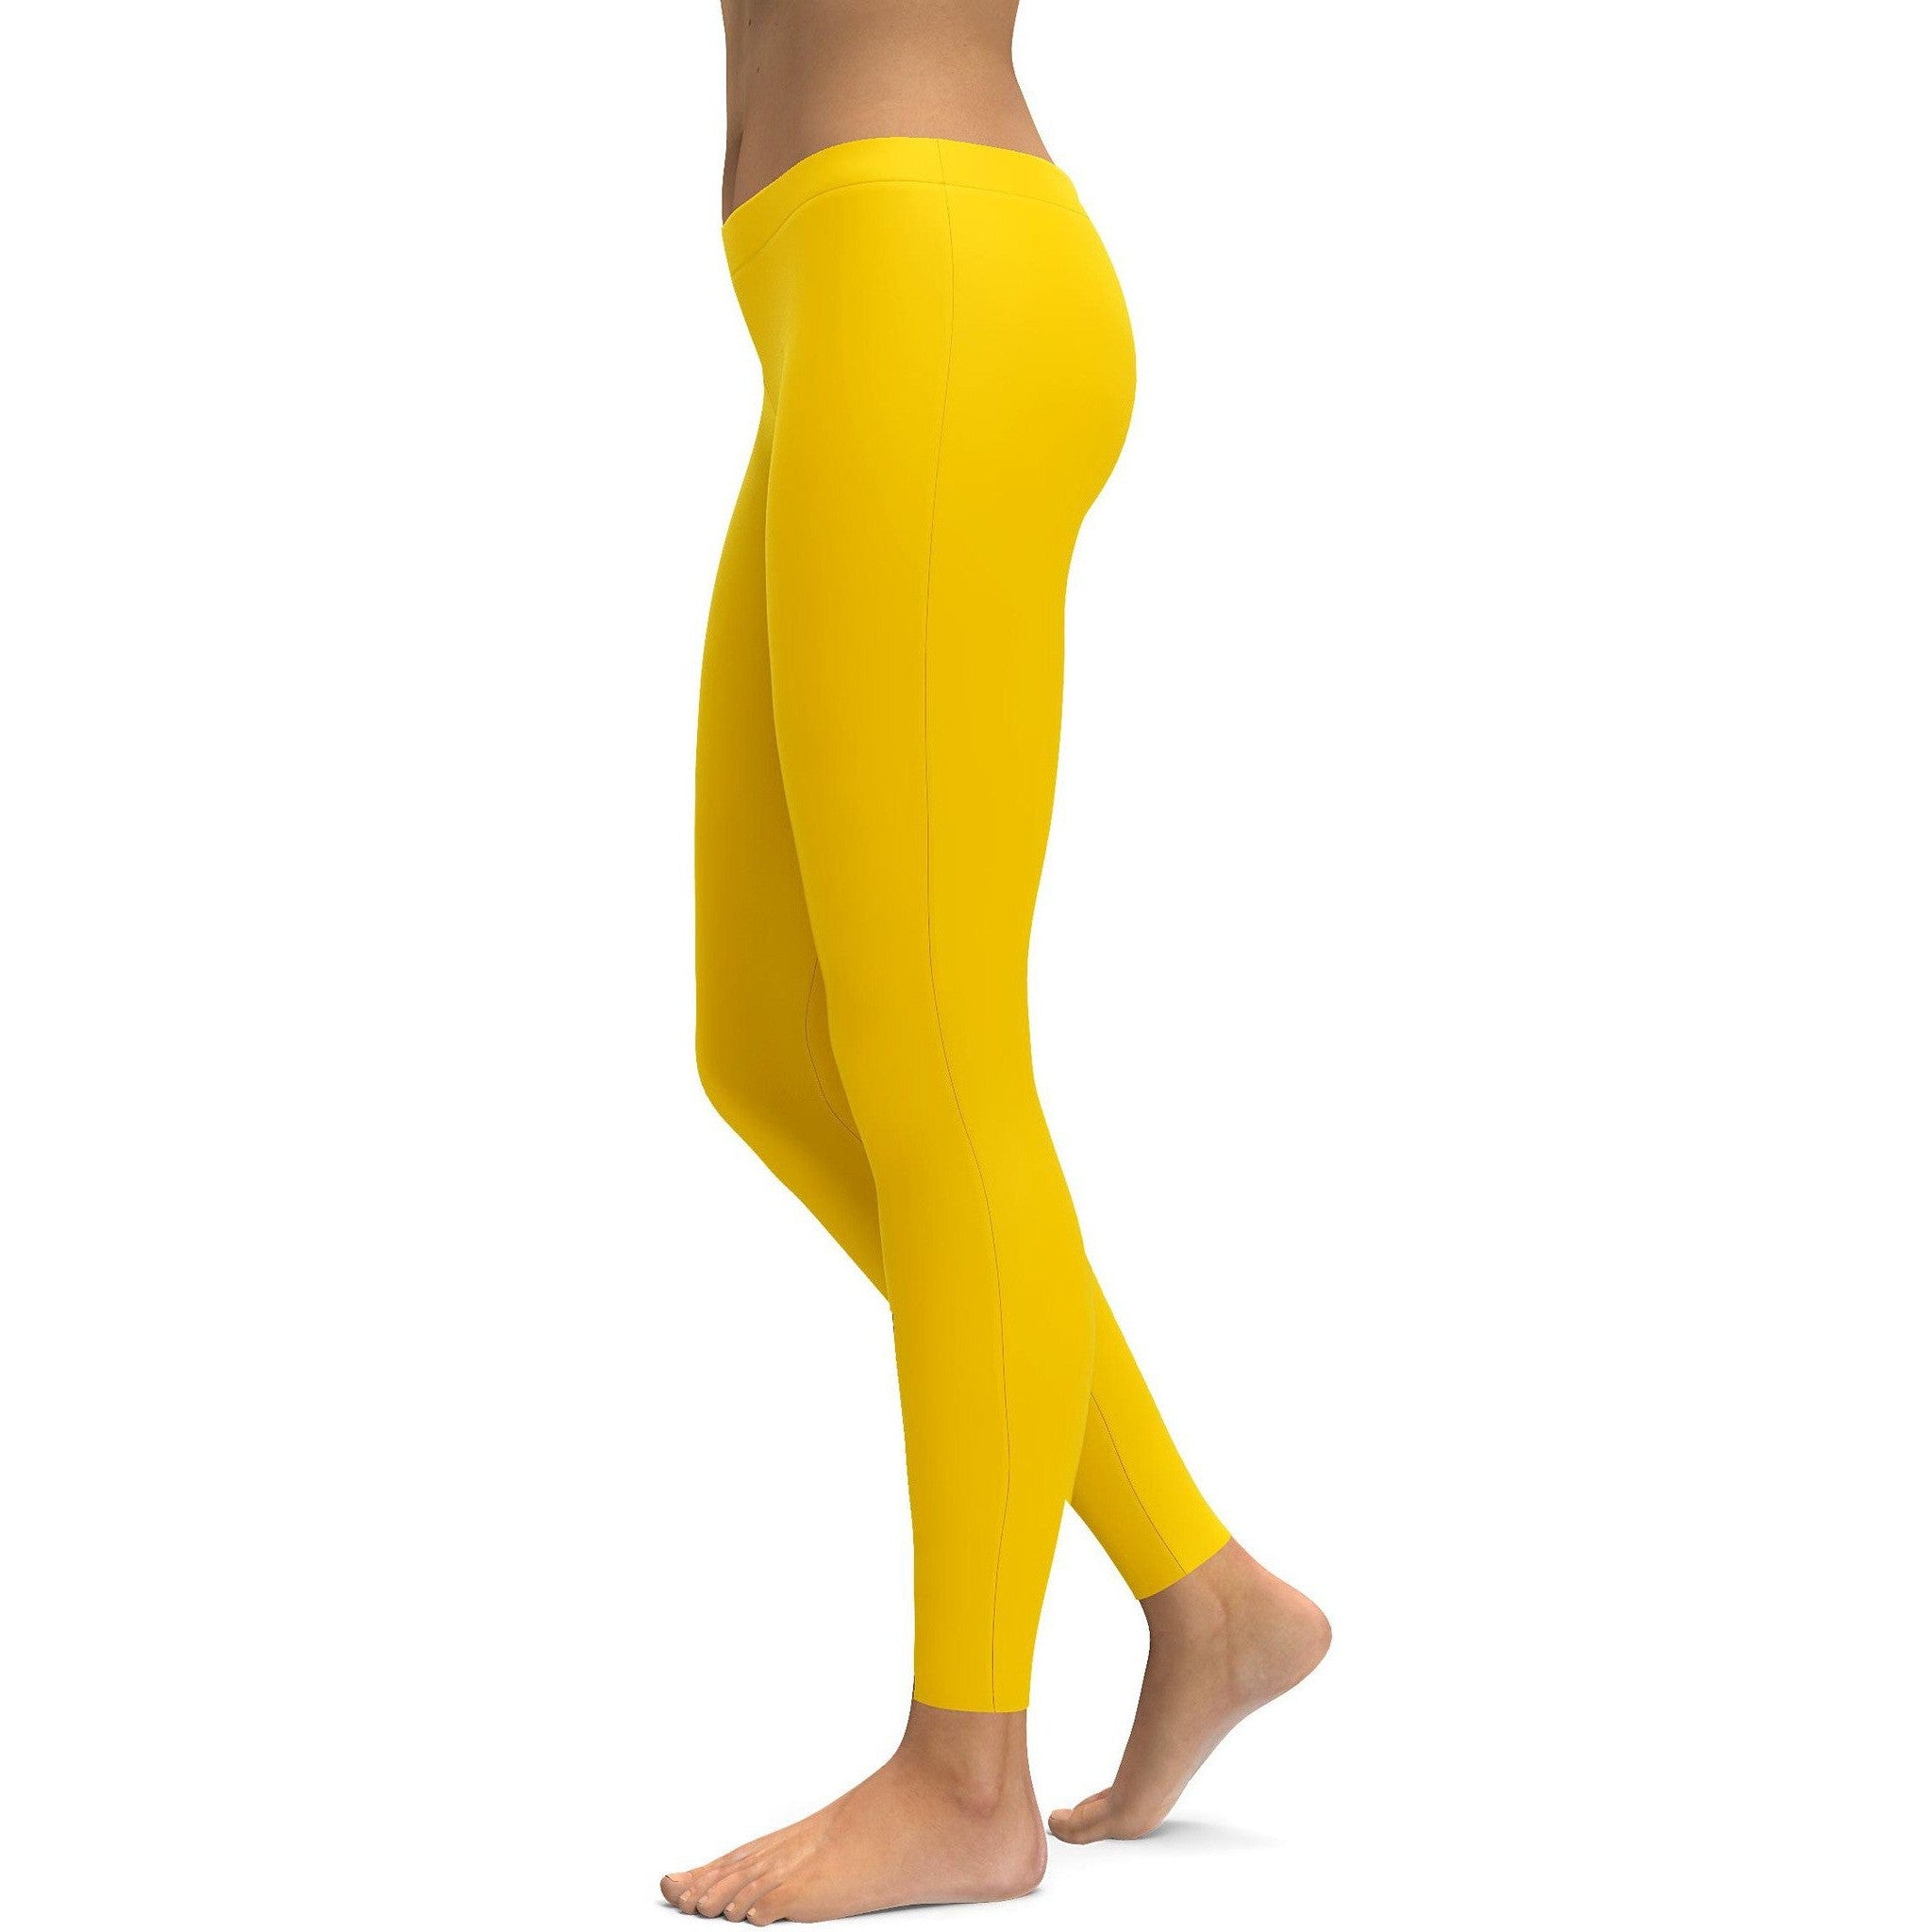 Women's Yellow Leggings